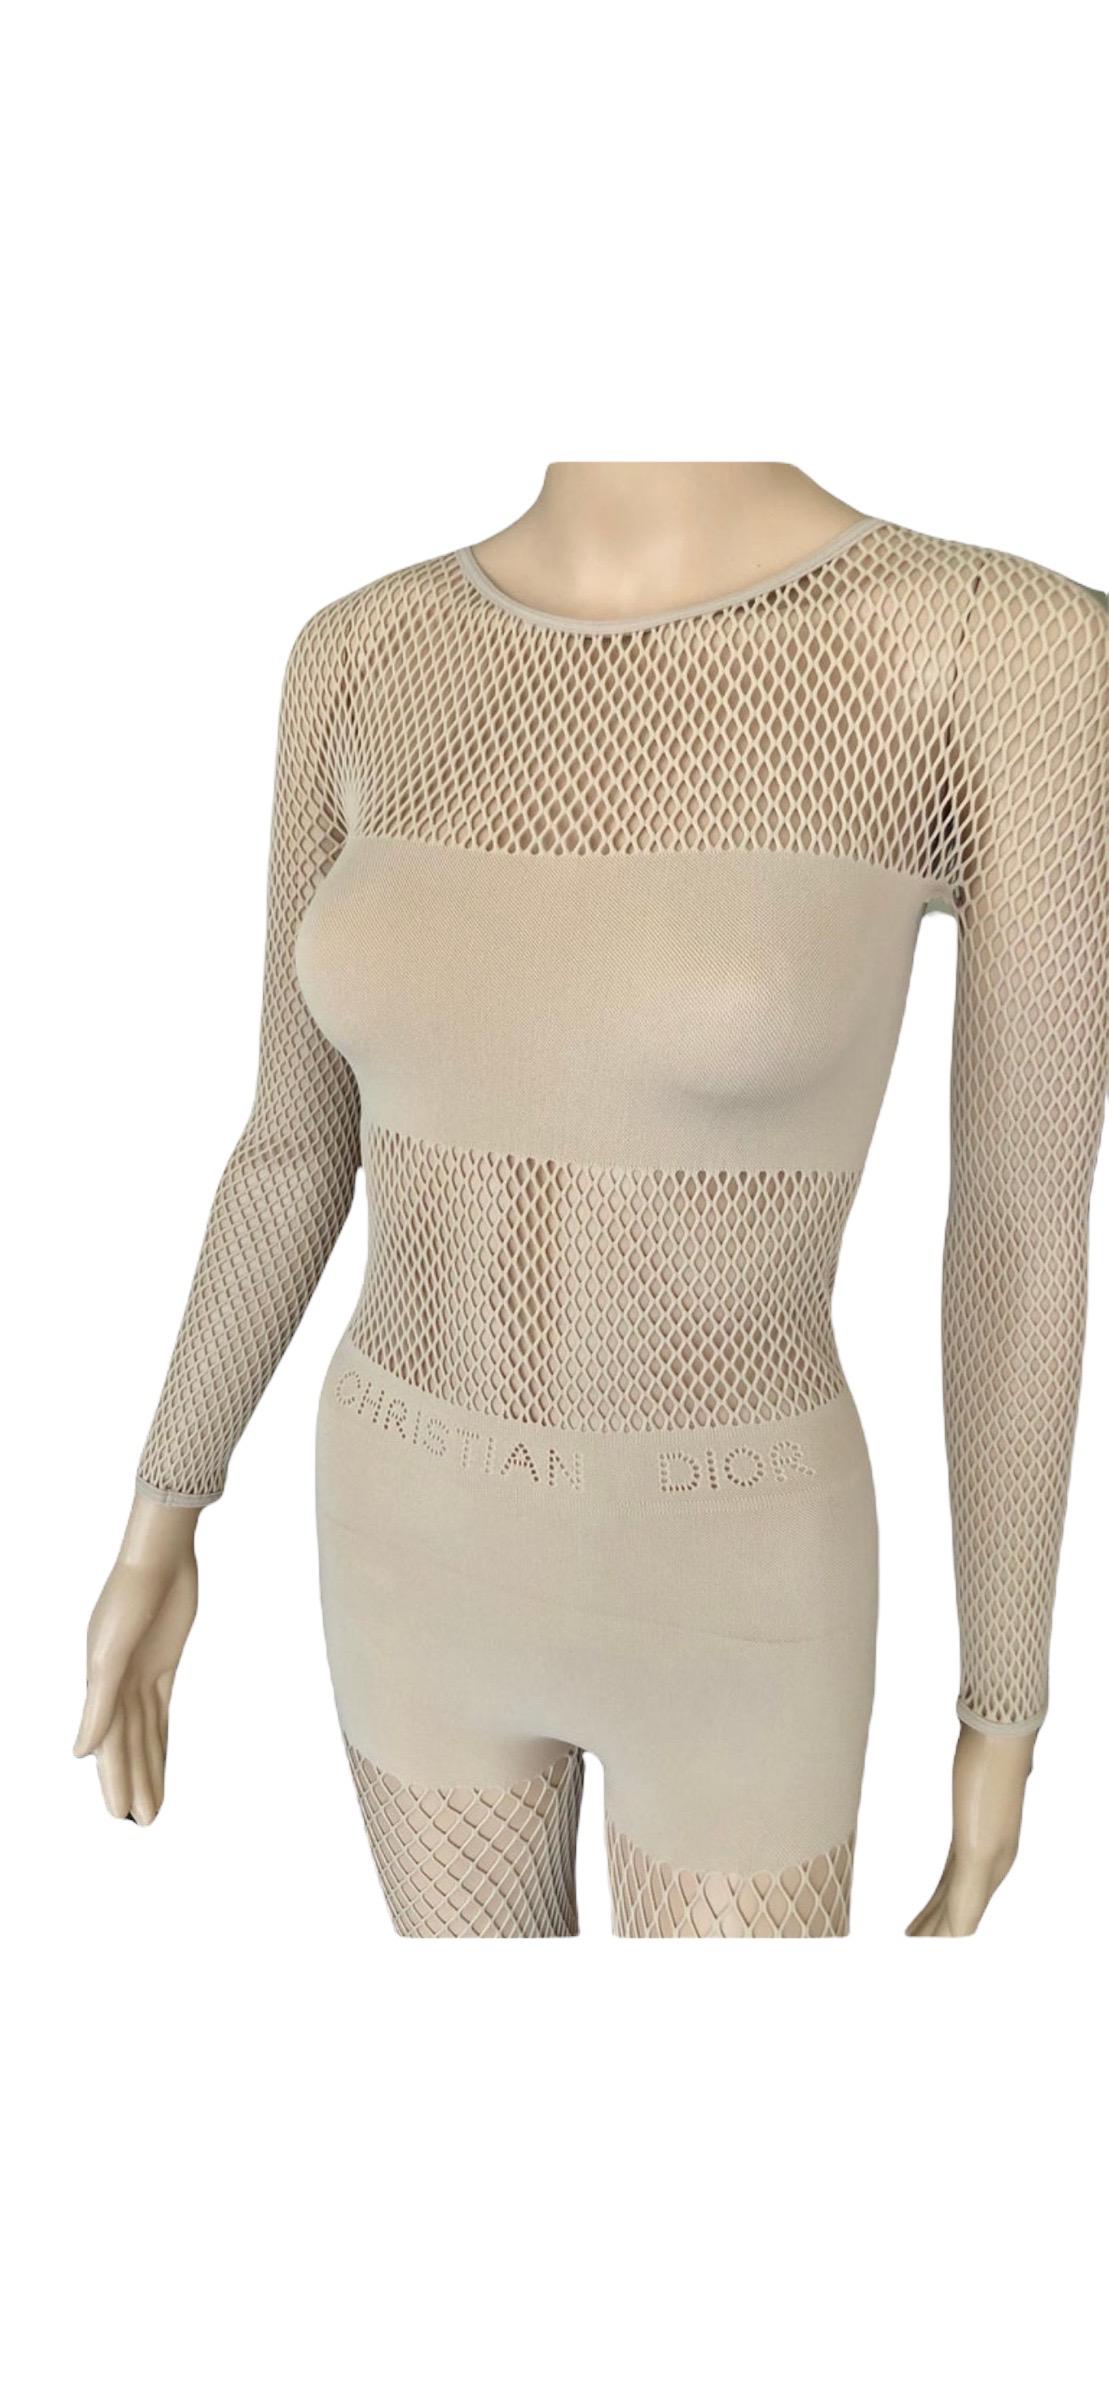 New Christian Dior Logo Monogram Sheer Mesh Fishnet Bodysuit Playsuit Jumpsuit 7